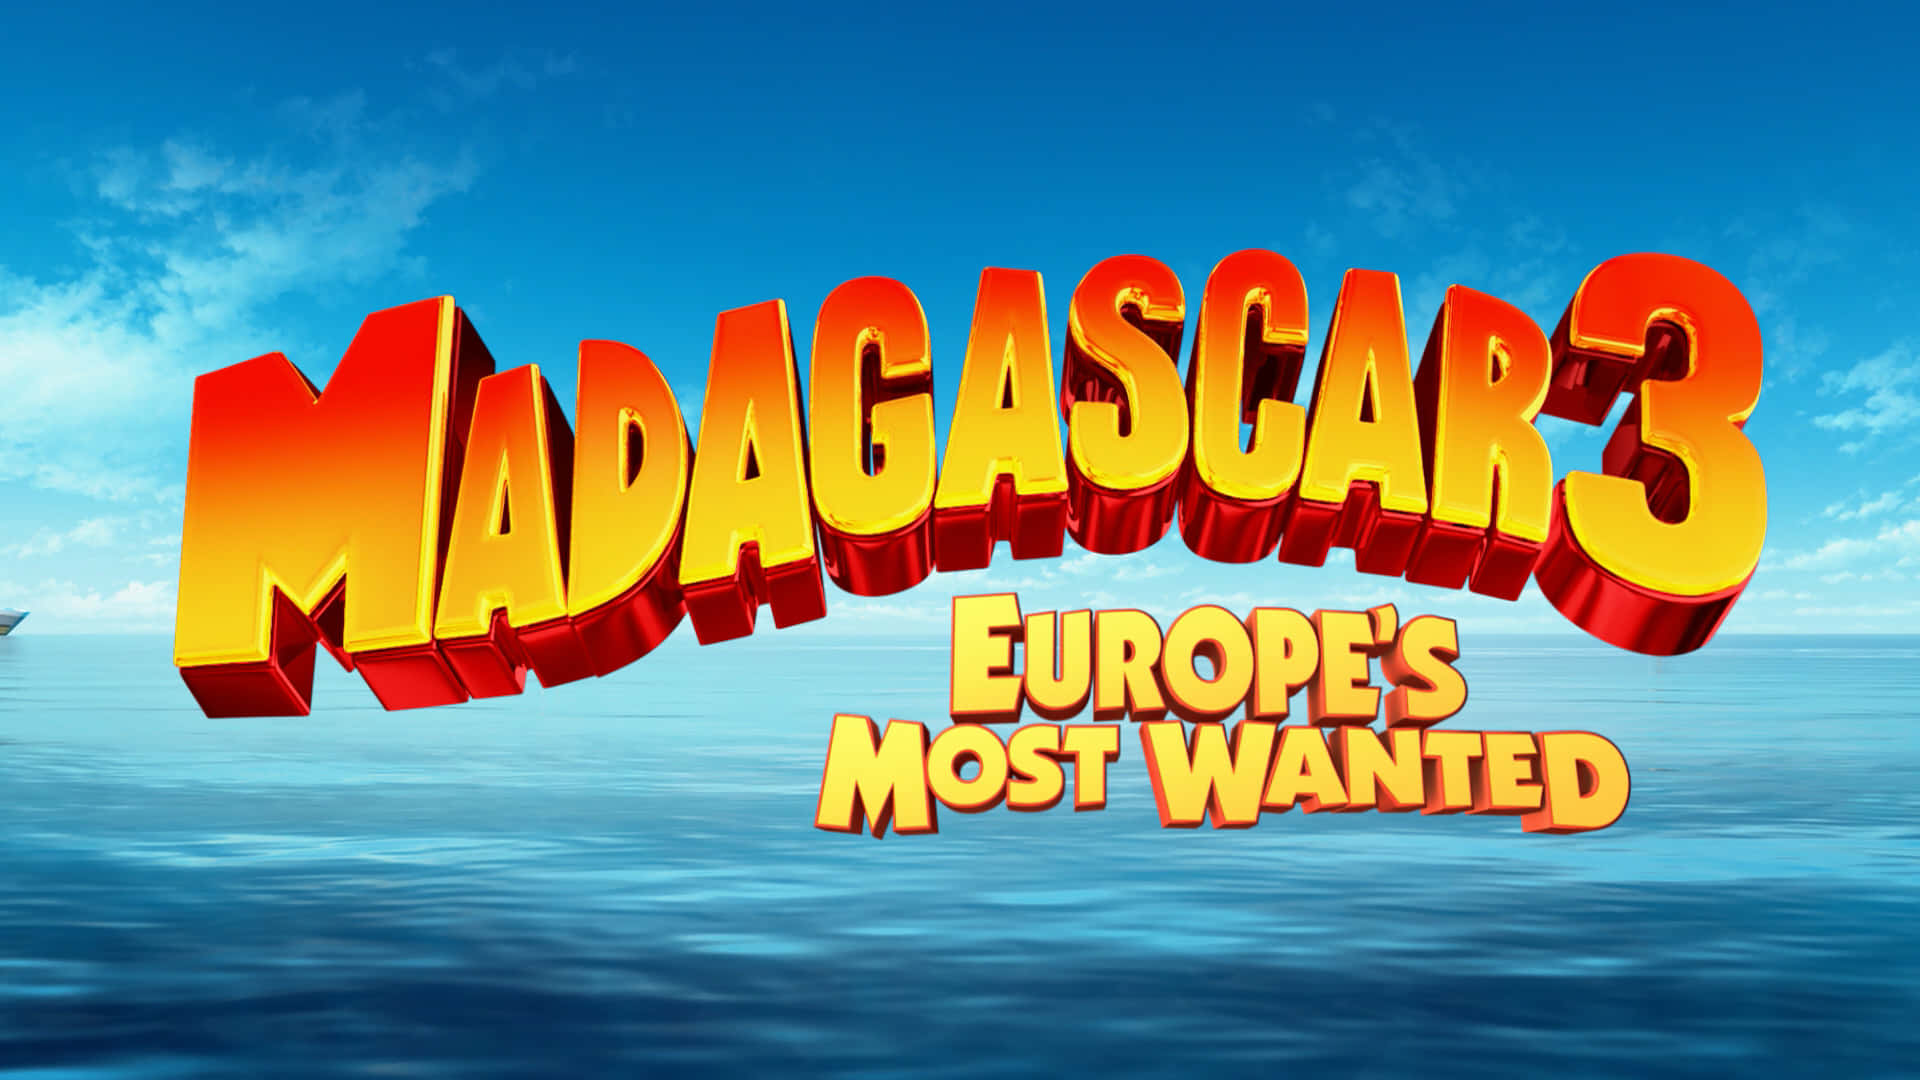 Madagascar3 Europes Most Wanted Logo Wallpaper